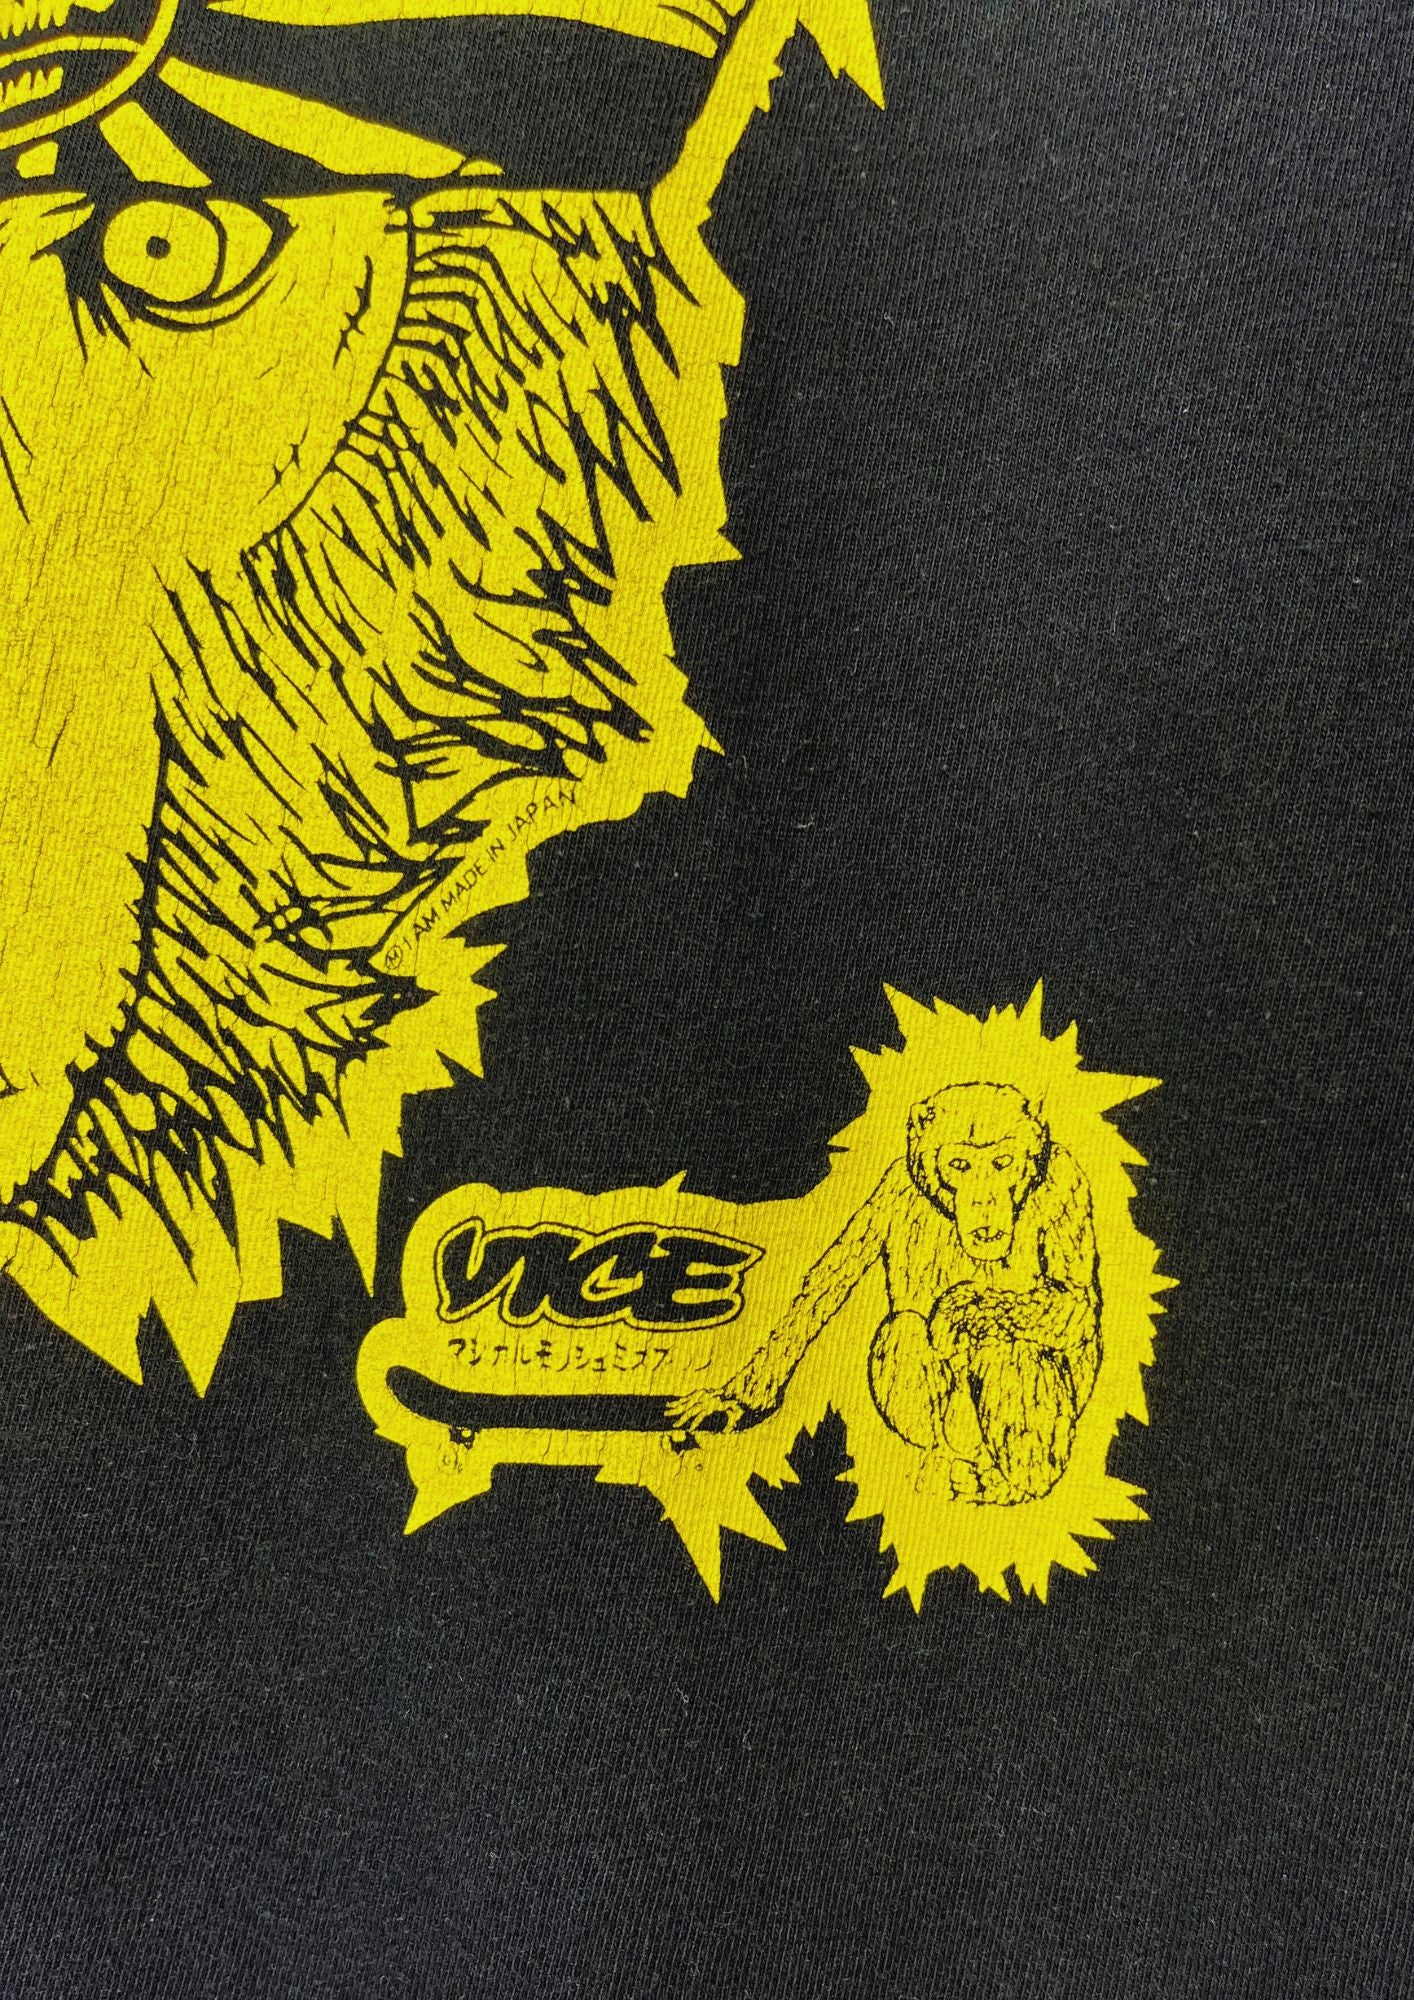 Magical Mosh Misfits x Vice Sumo Wrestler Japanese Monkey T-shirt